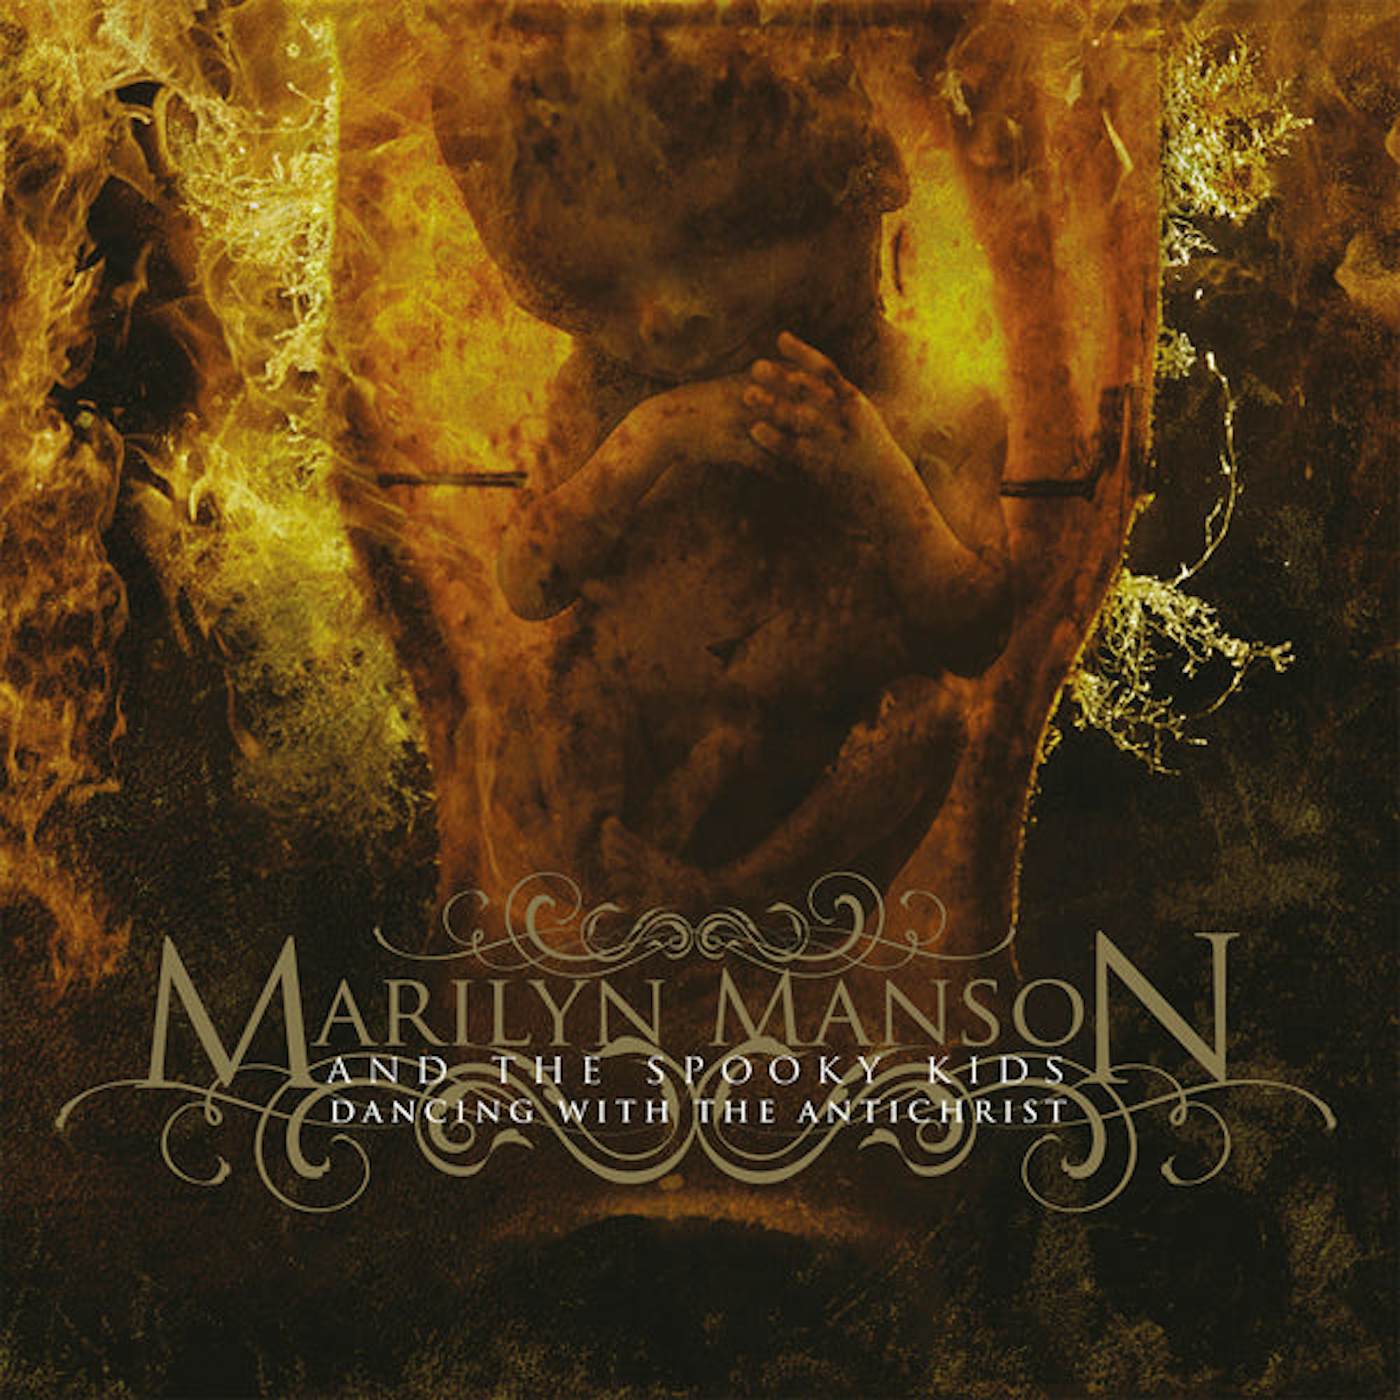 Marilyn Manson LP - Dancing With The Antichrist (Vinyl)